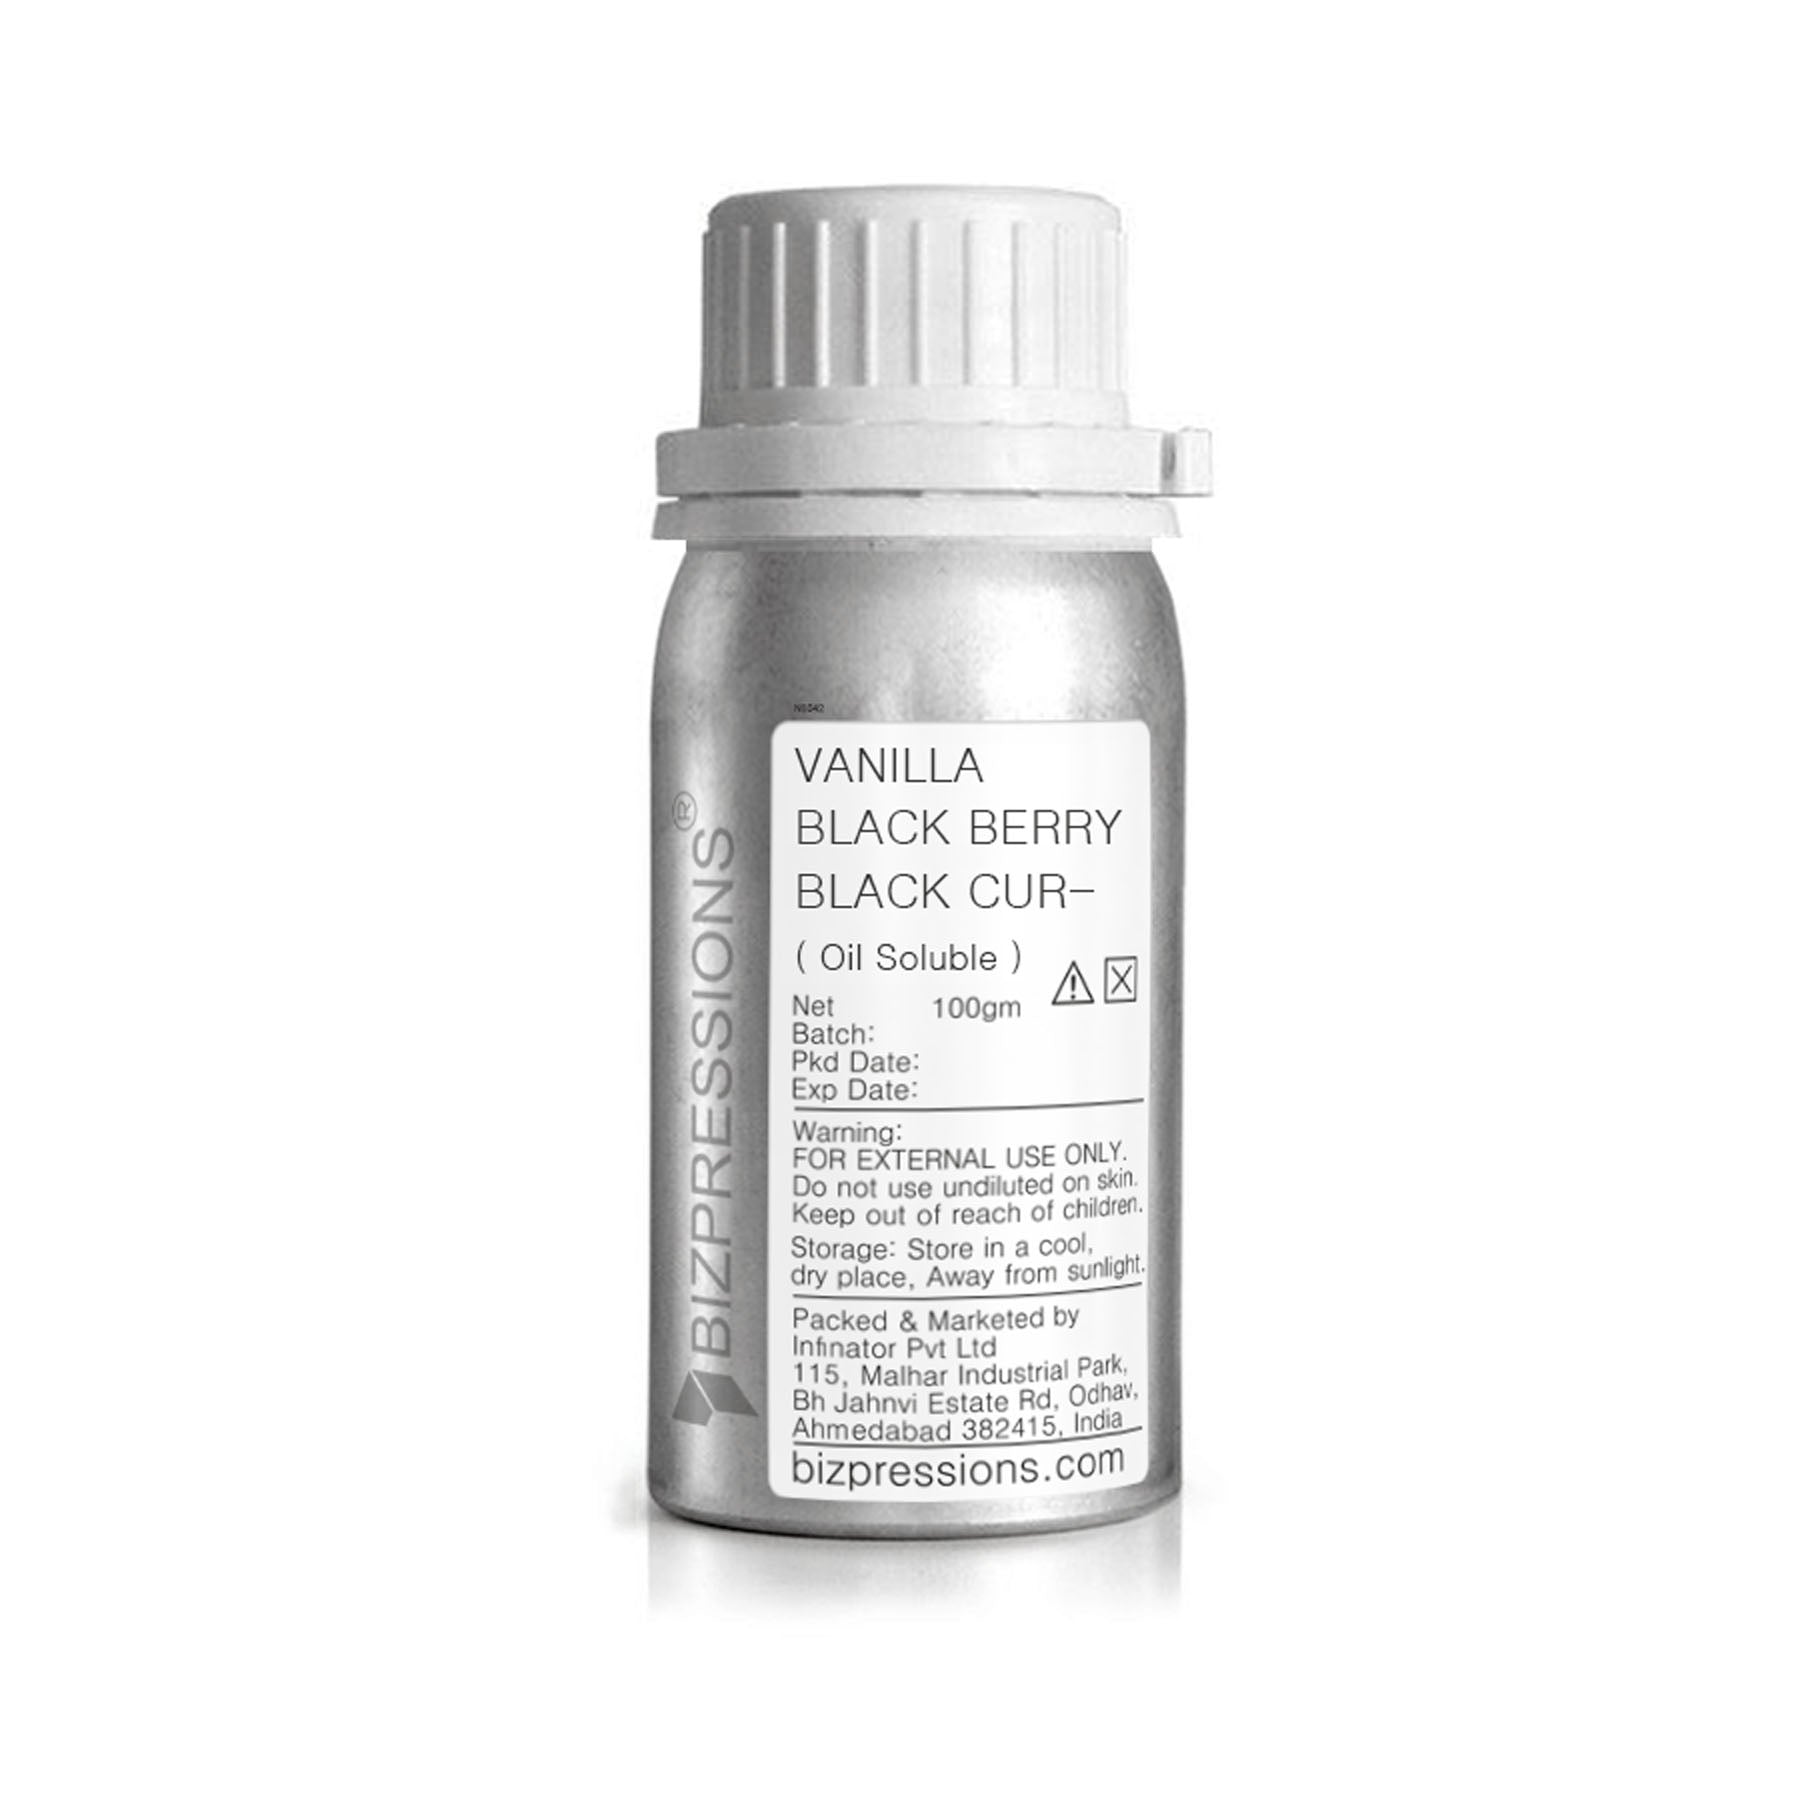 VANILLA BLACK BERRY BLACK CURRENT - Fragrance ( Oil Soluble ) - 100 gm